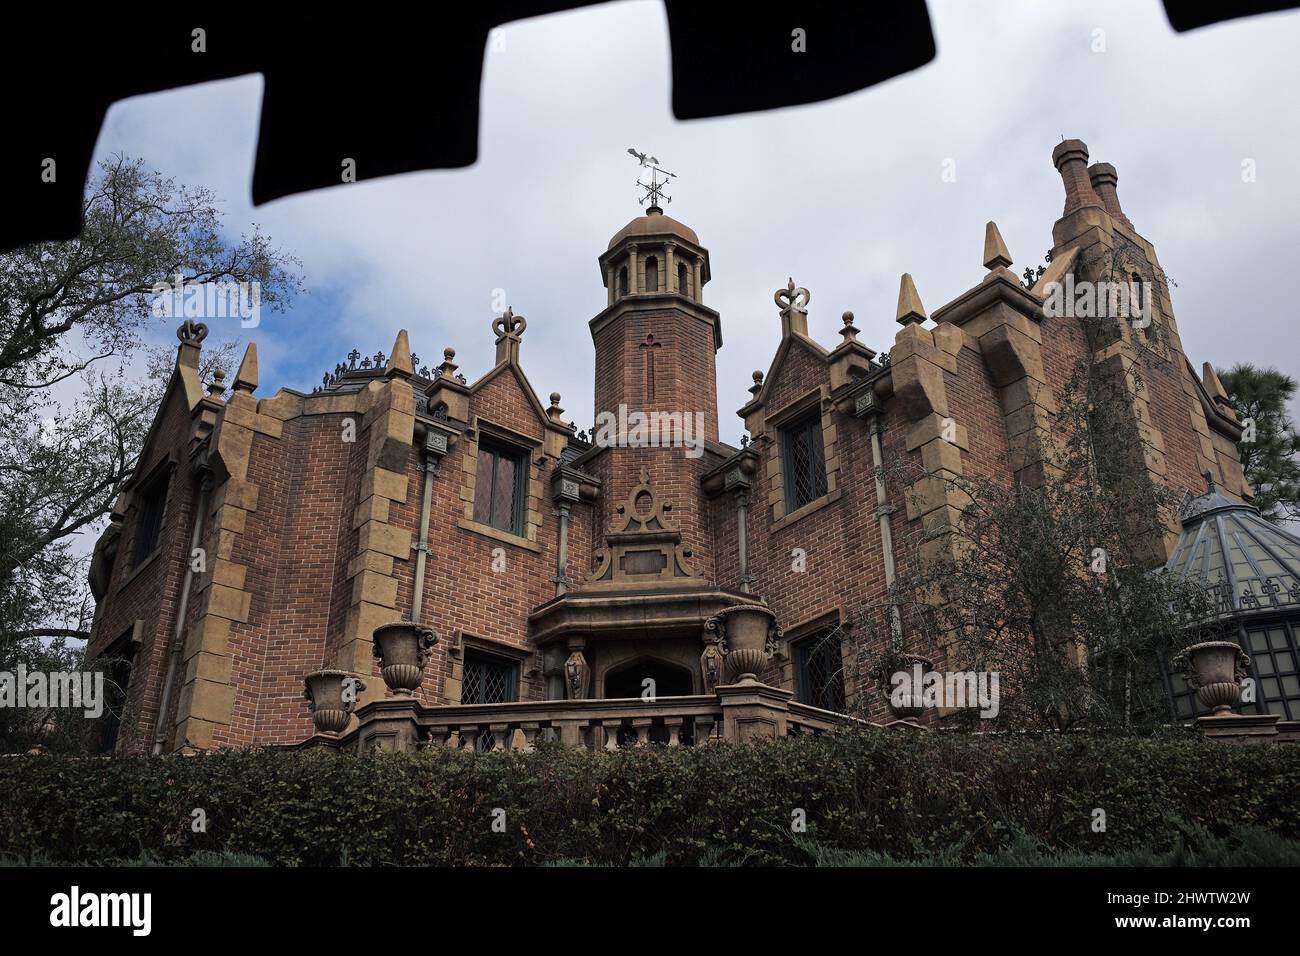 Haunted Mansion attraction in Walt Disney World Magic Kingdom Park in Orlando, Florida USA Stock Photo